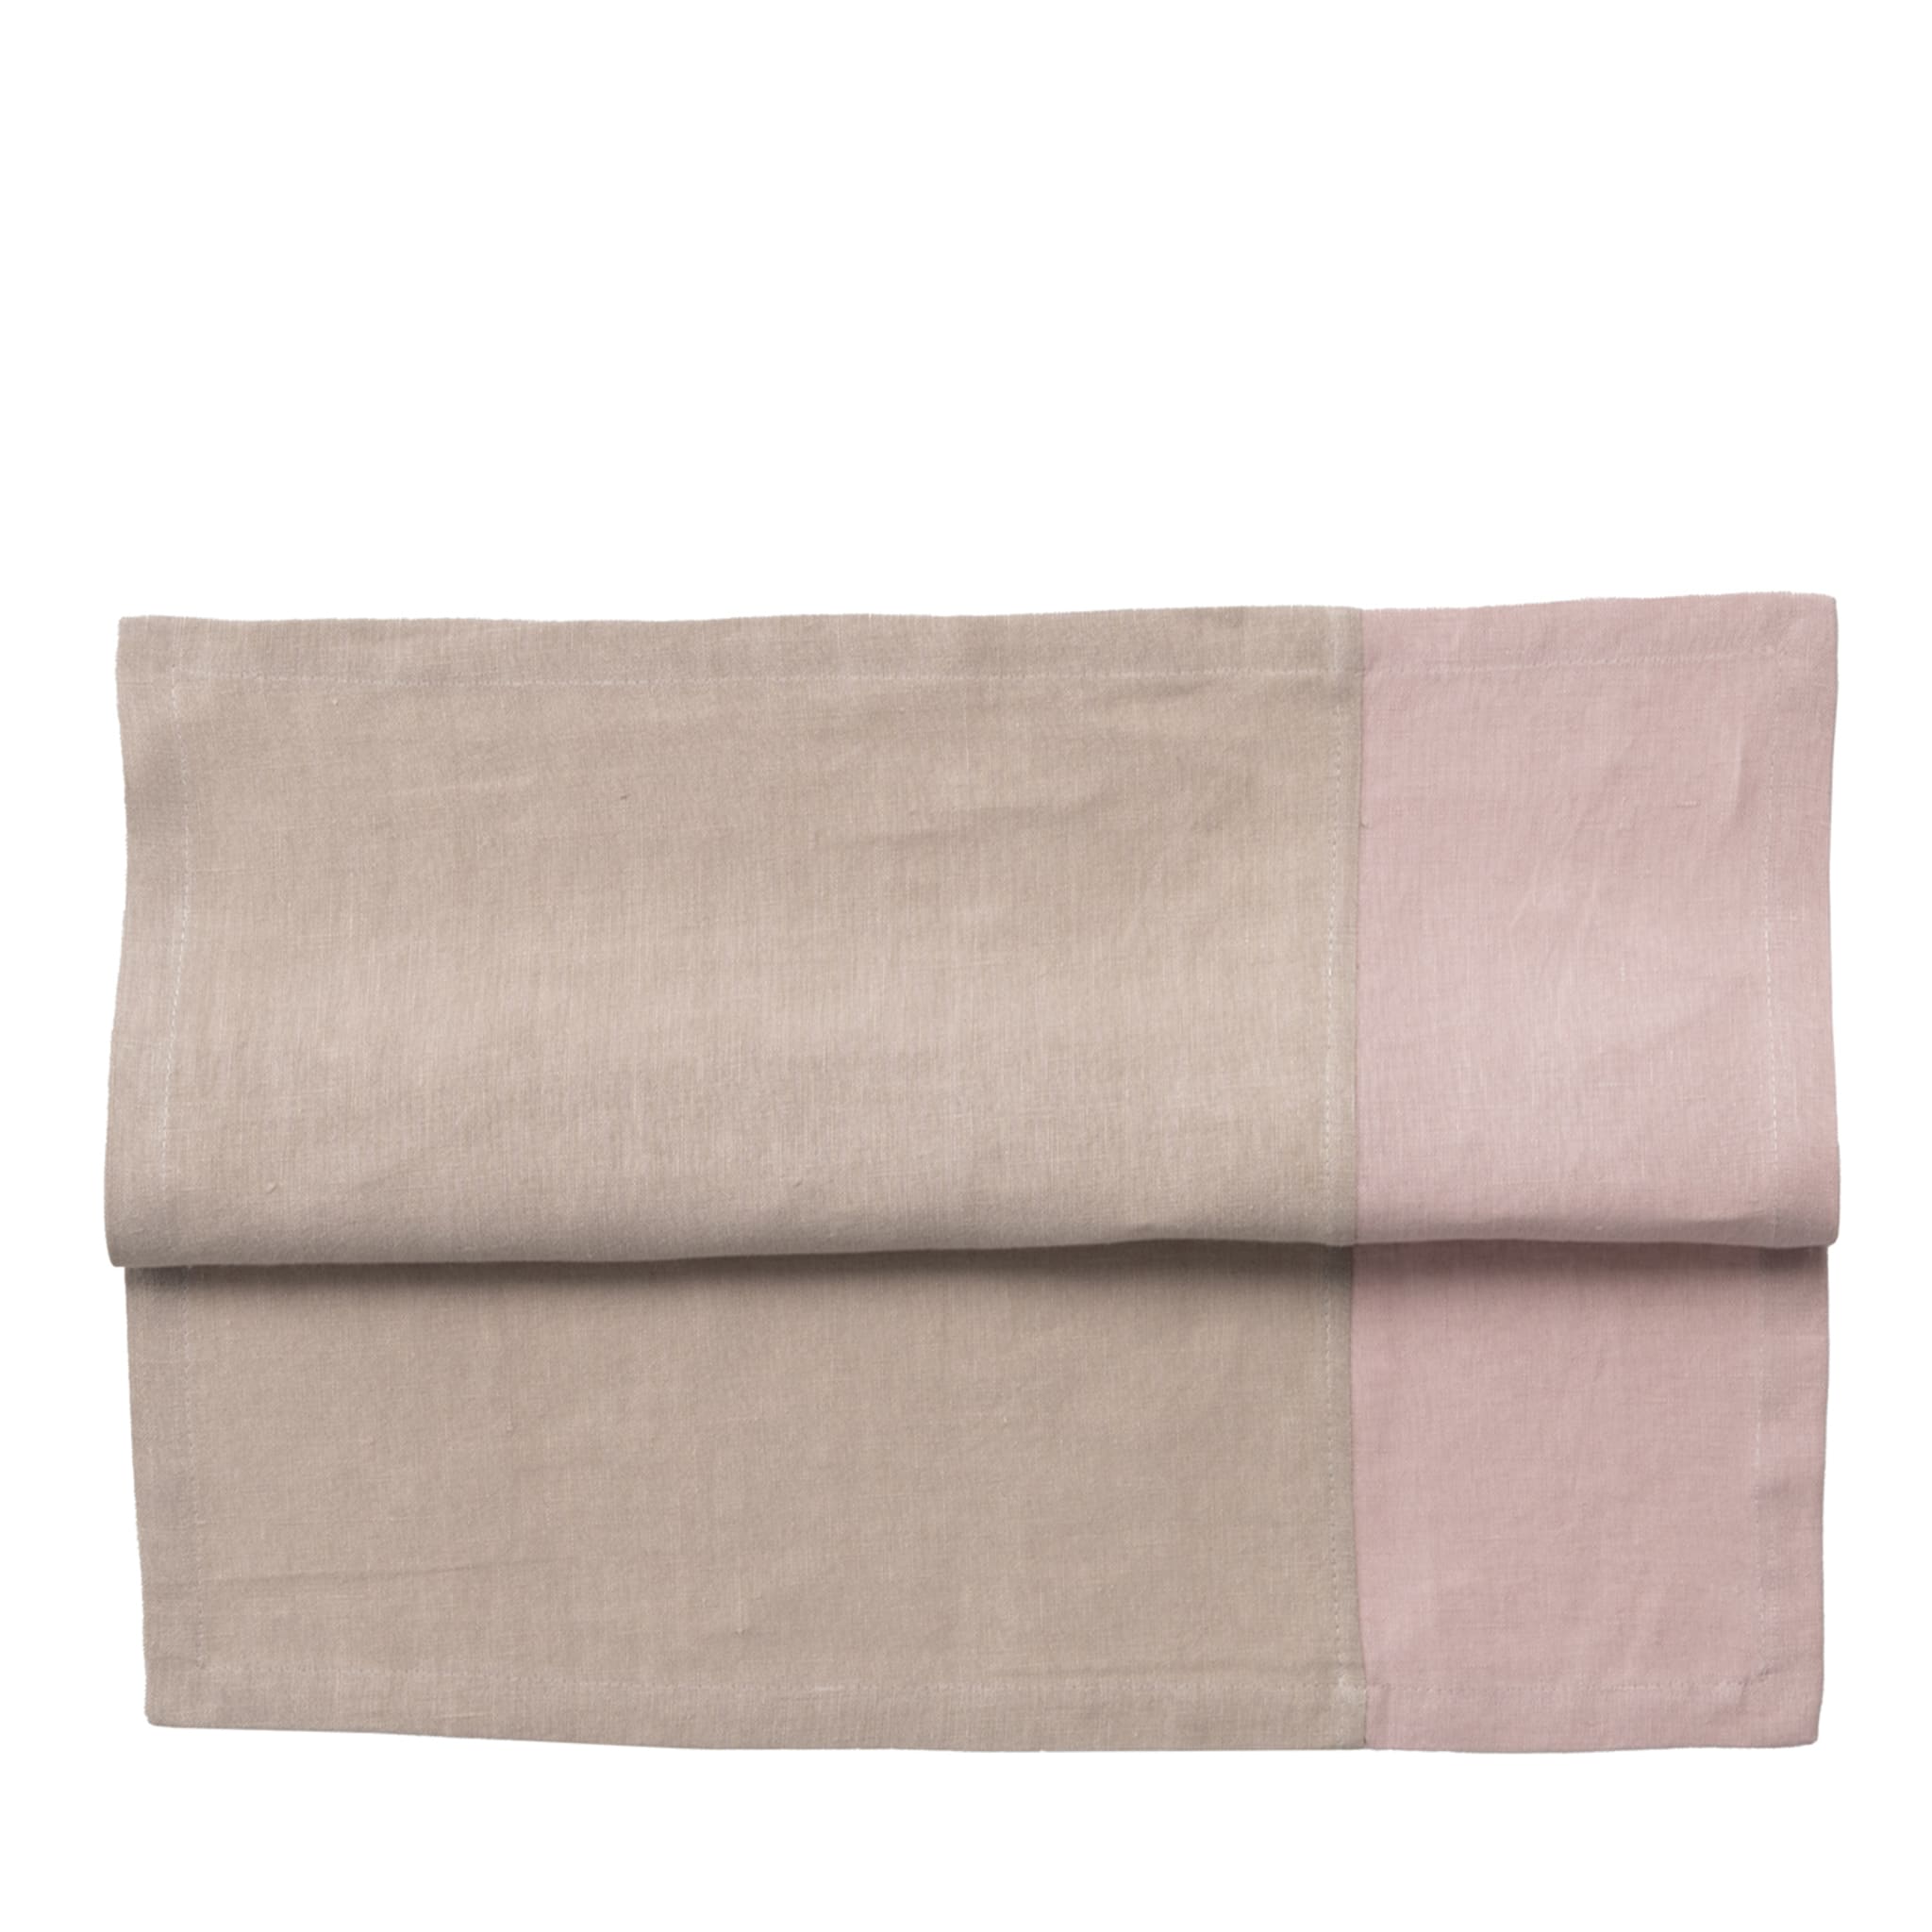 Set of 4 Luxury Bicolor Silver Pink-Beige Linen Napkins - Main view